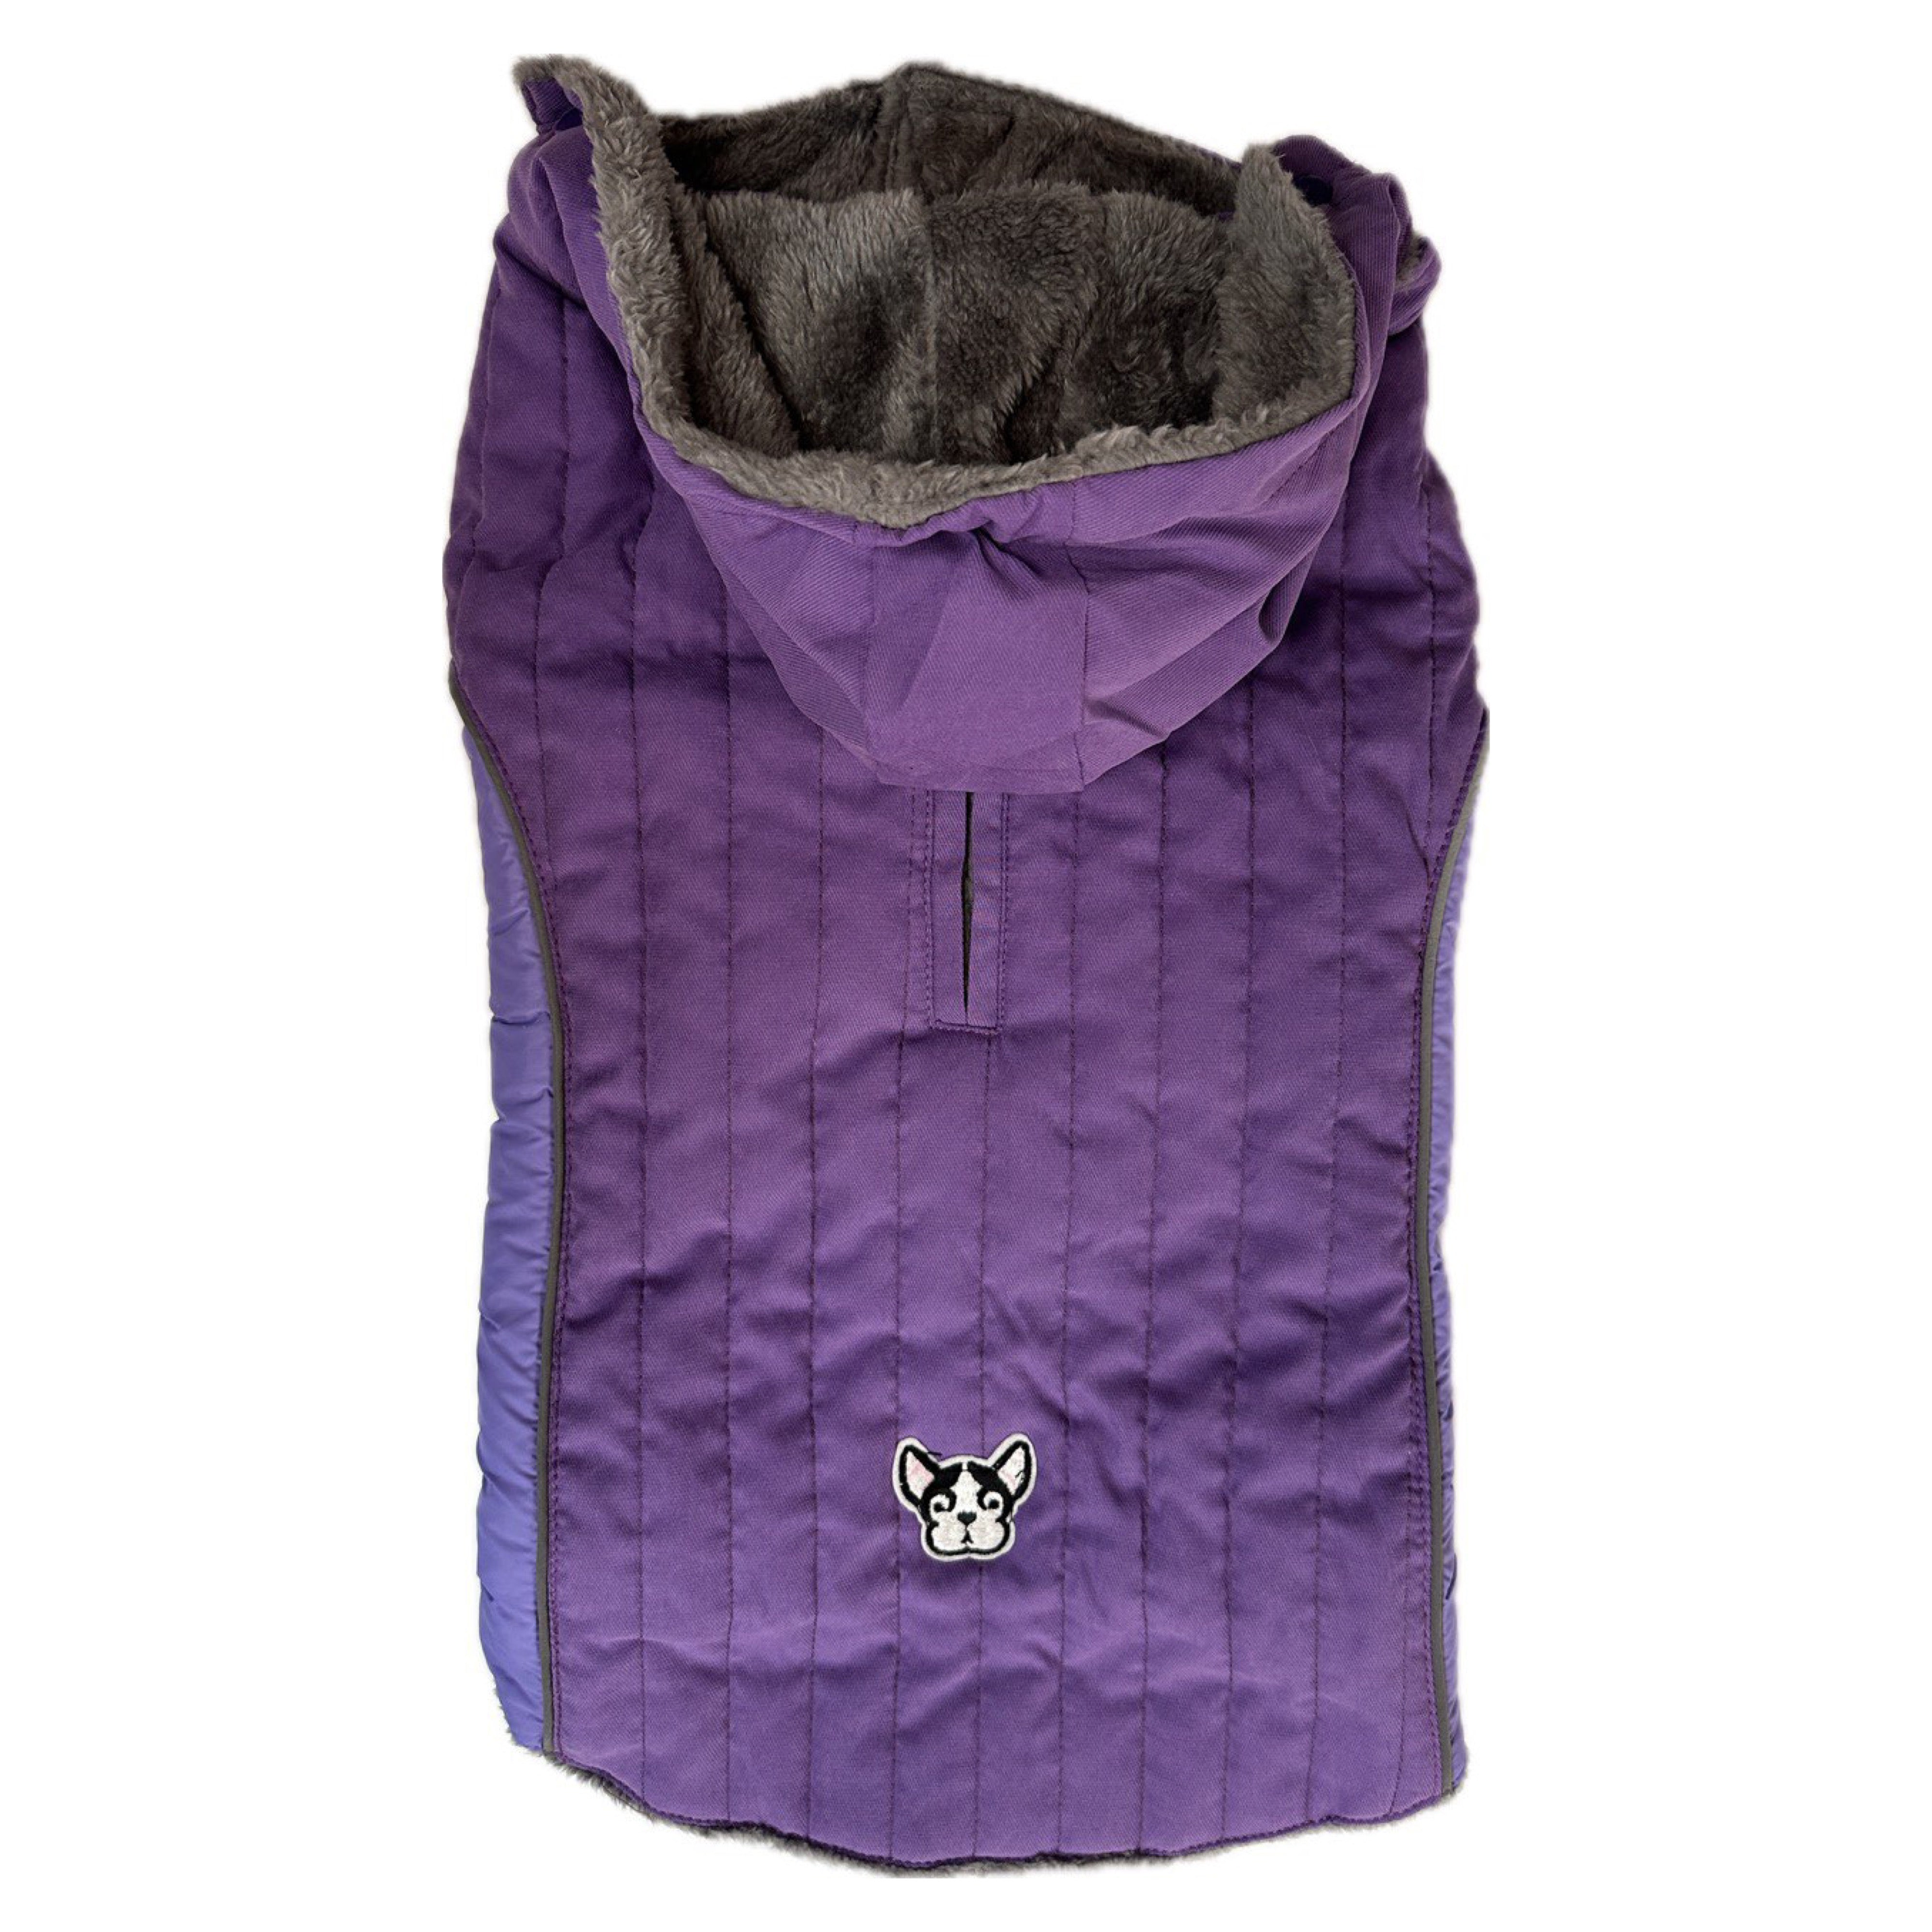 Purple Faux Fur Winter Coat with Detachable Hood, 18”